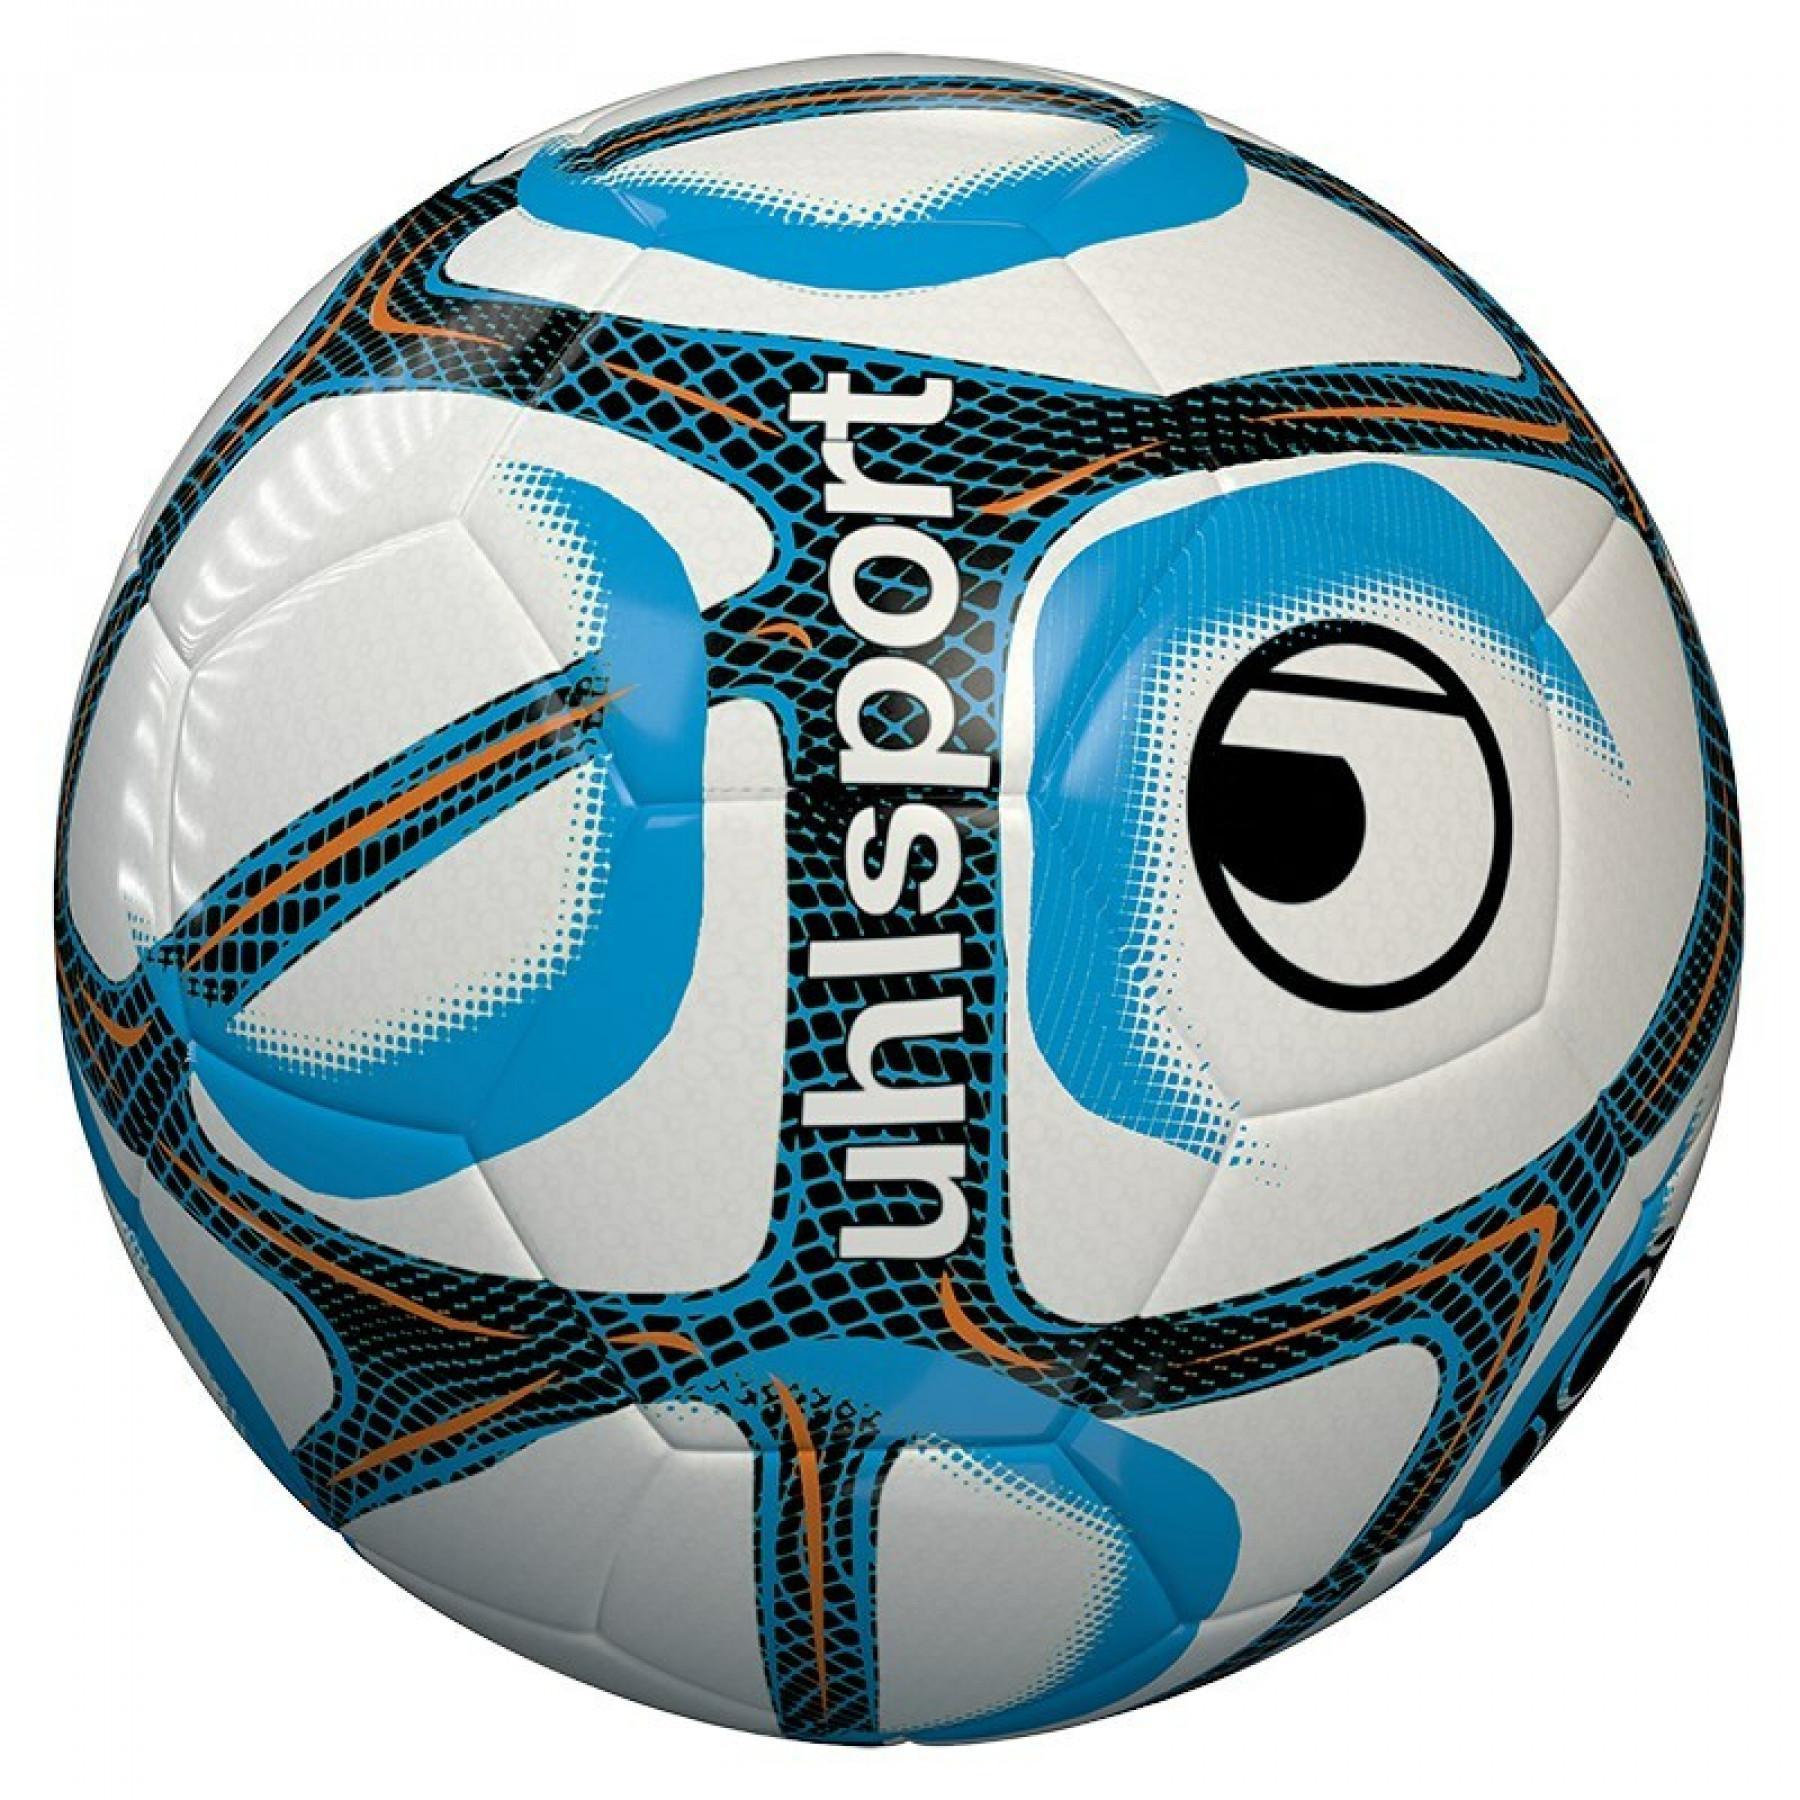 Ballon Uhlsport Triompheo club training